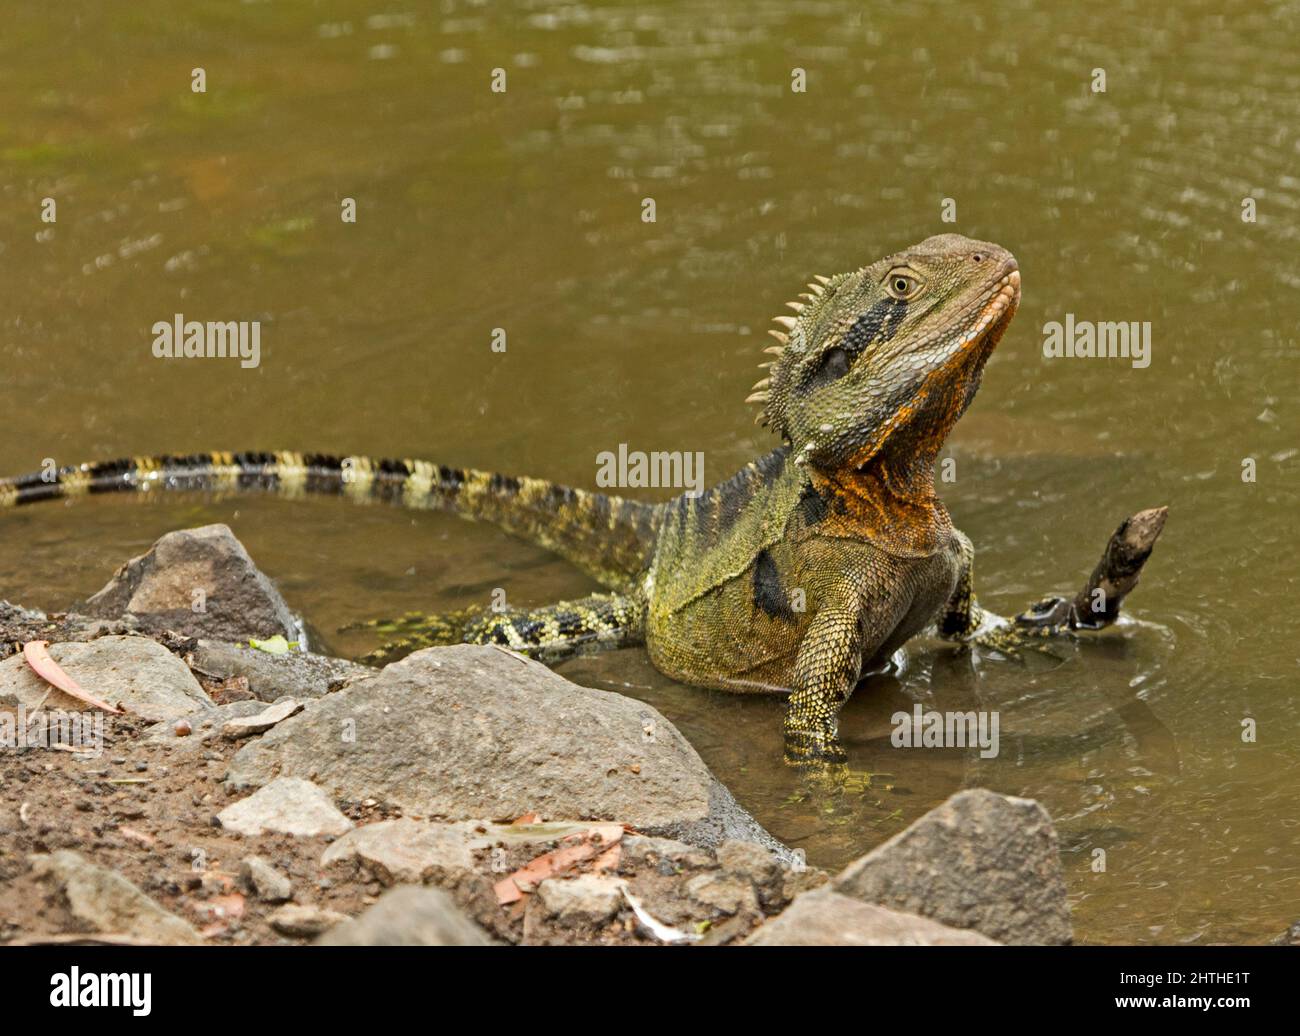 Eastern Water Dragon lizard, Intellagama lesueurii, in water of lake in urban park in Australia Stock Photo